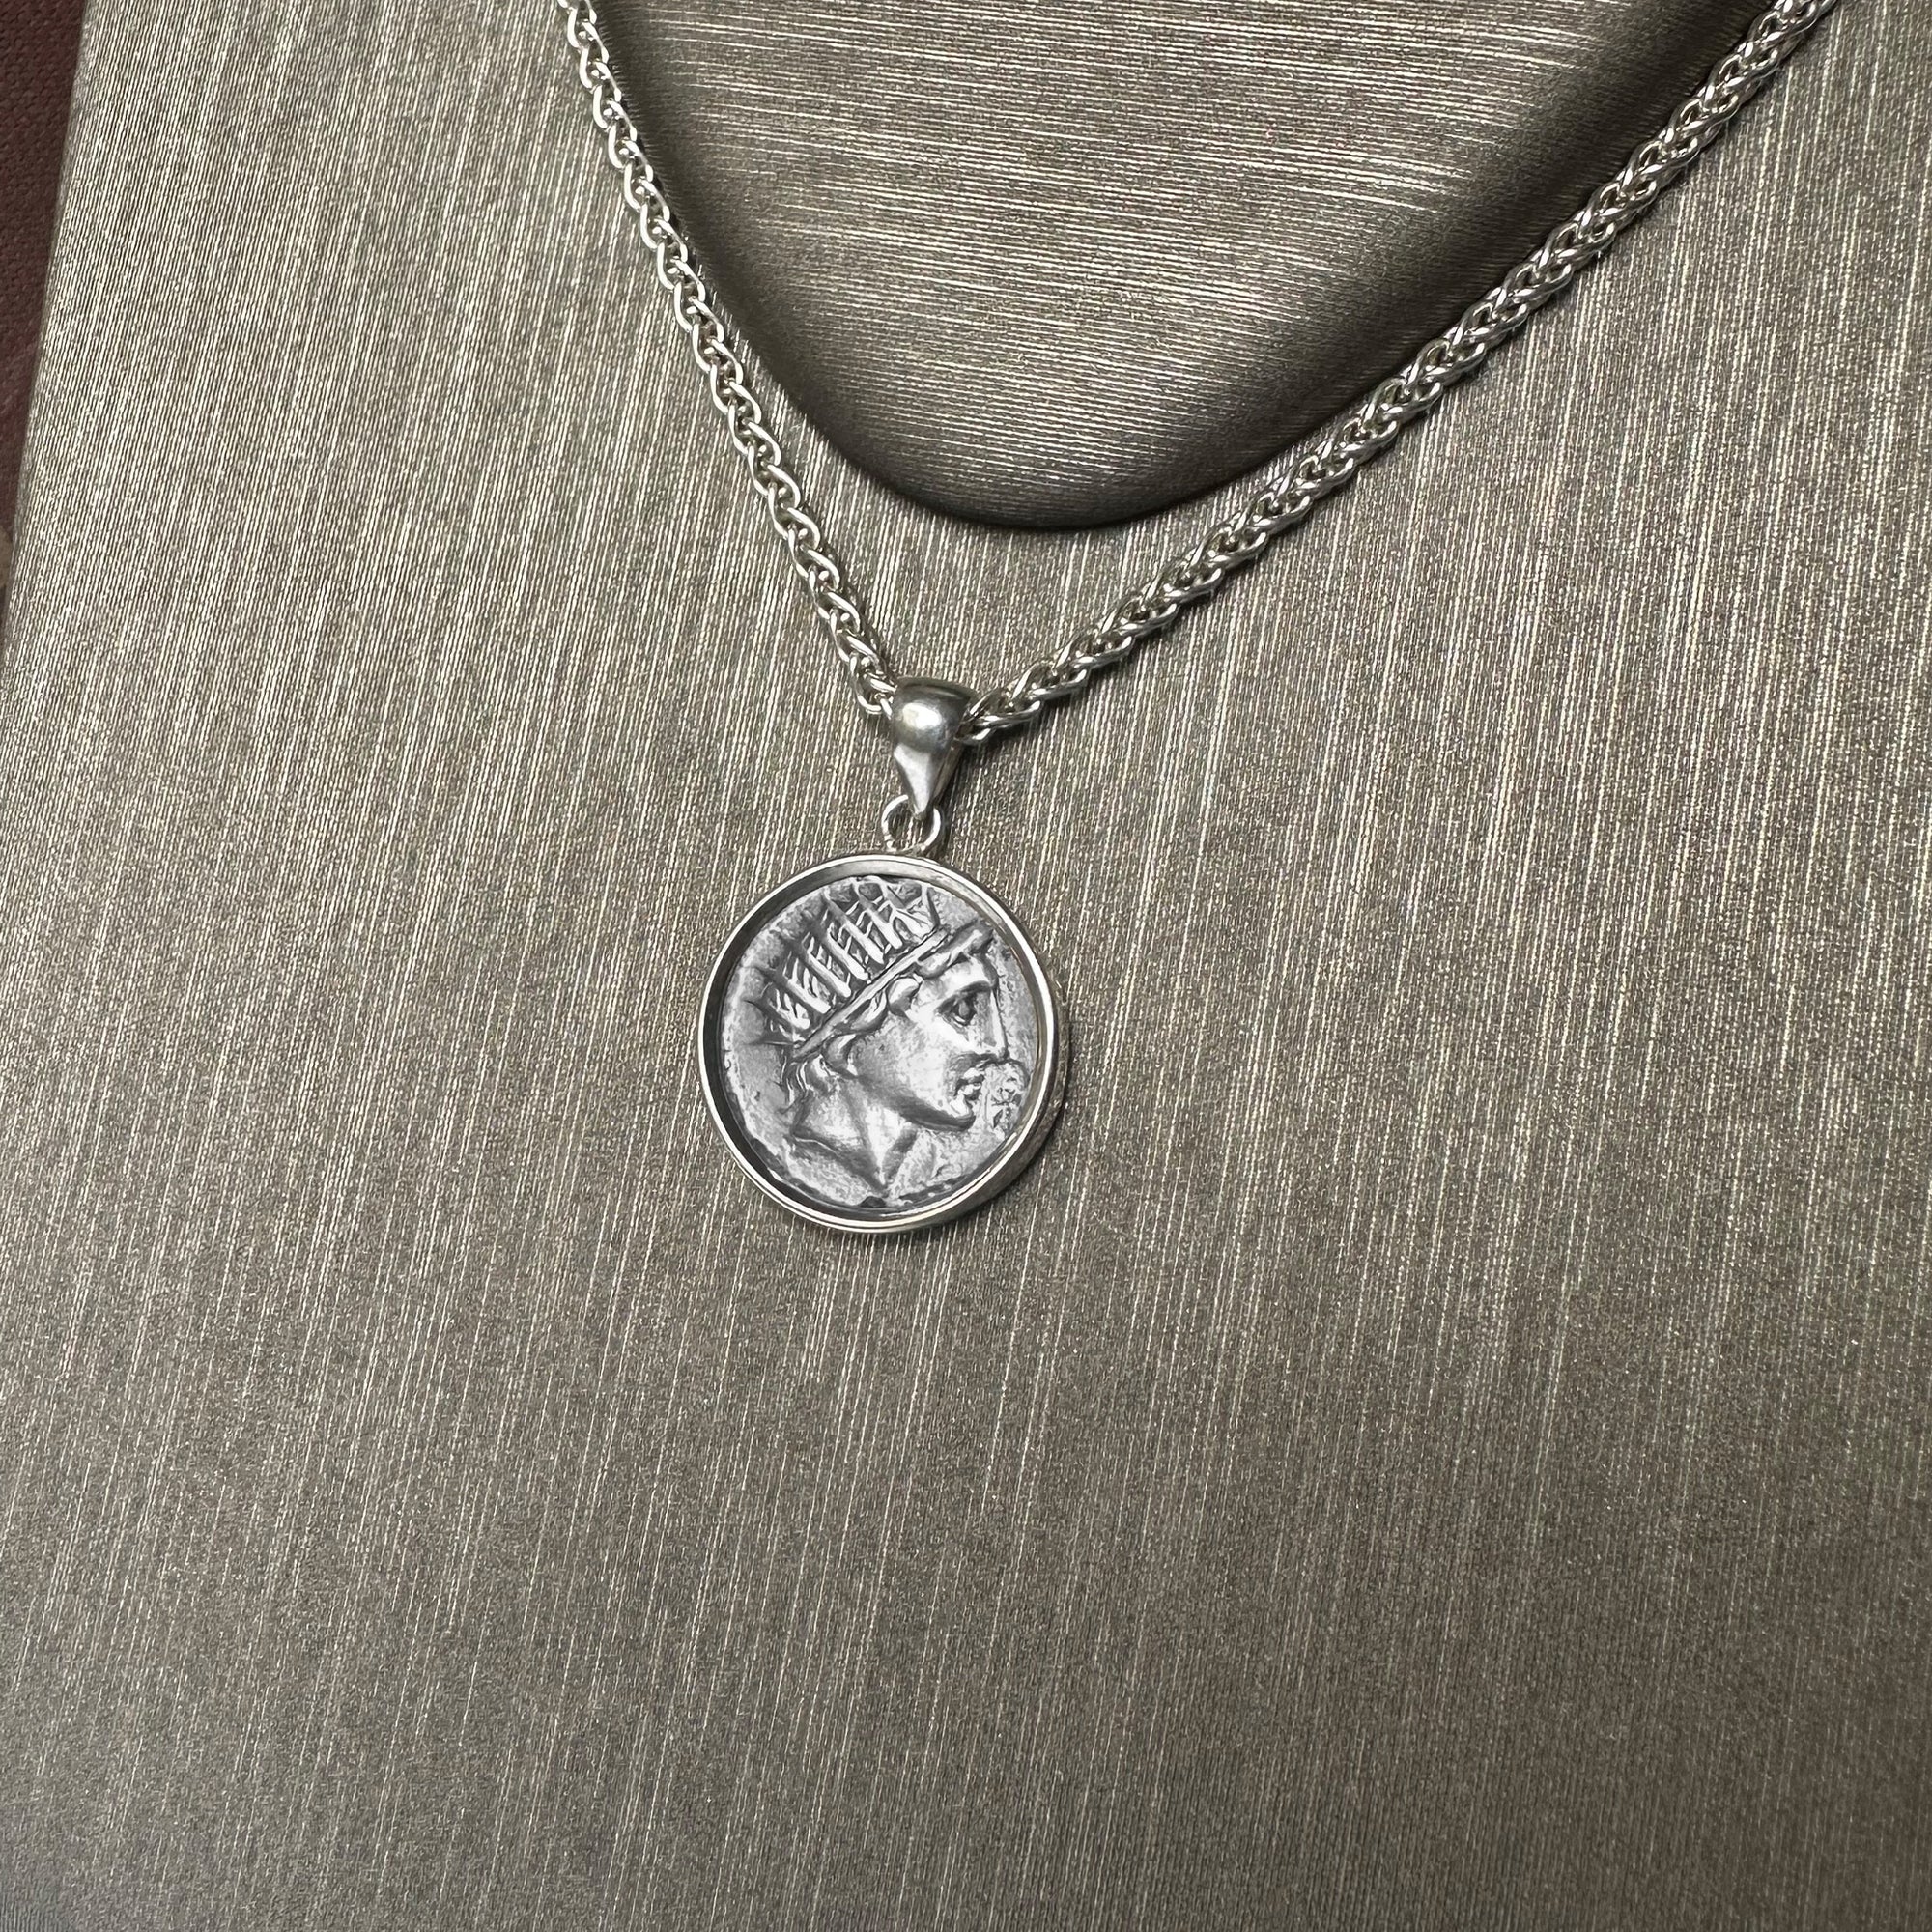 Genuine Roman coin 109 BC silver pendant depicting the god Sun, Helios3